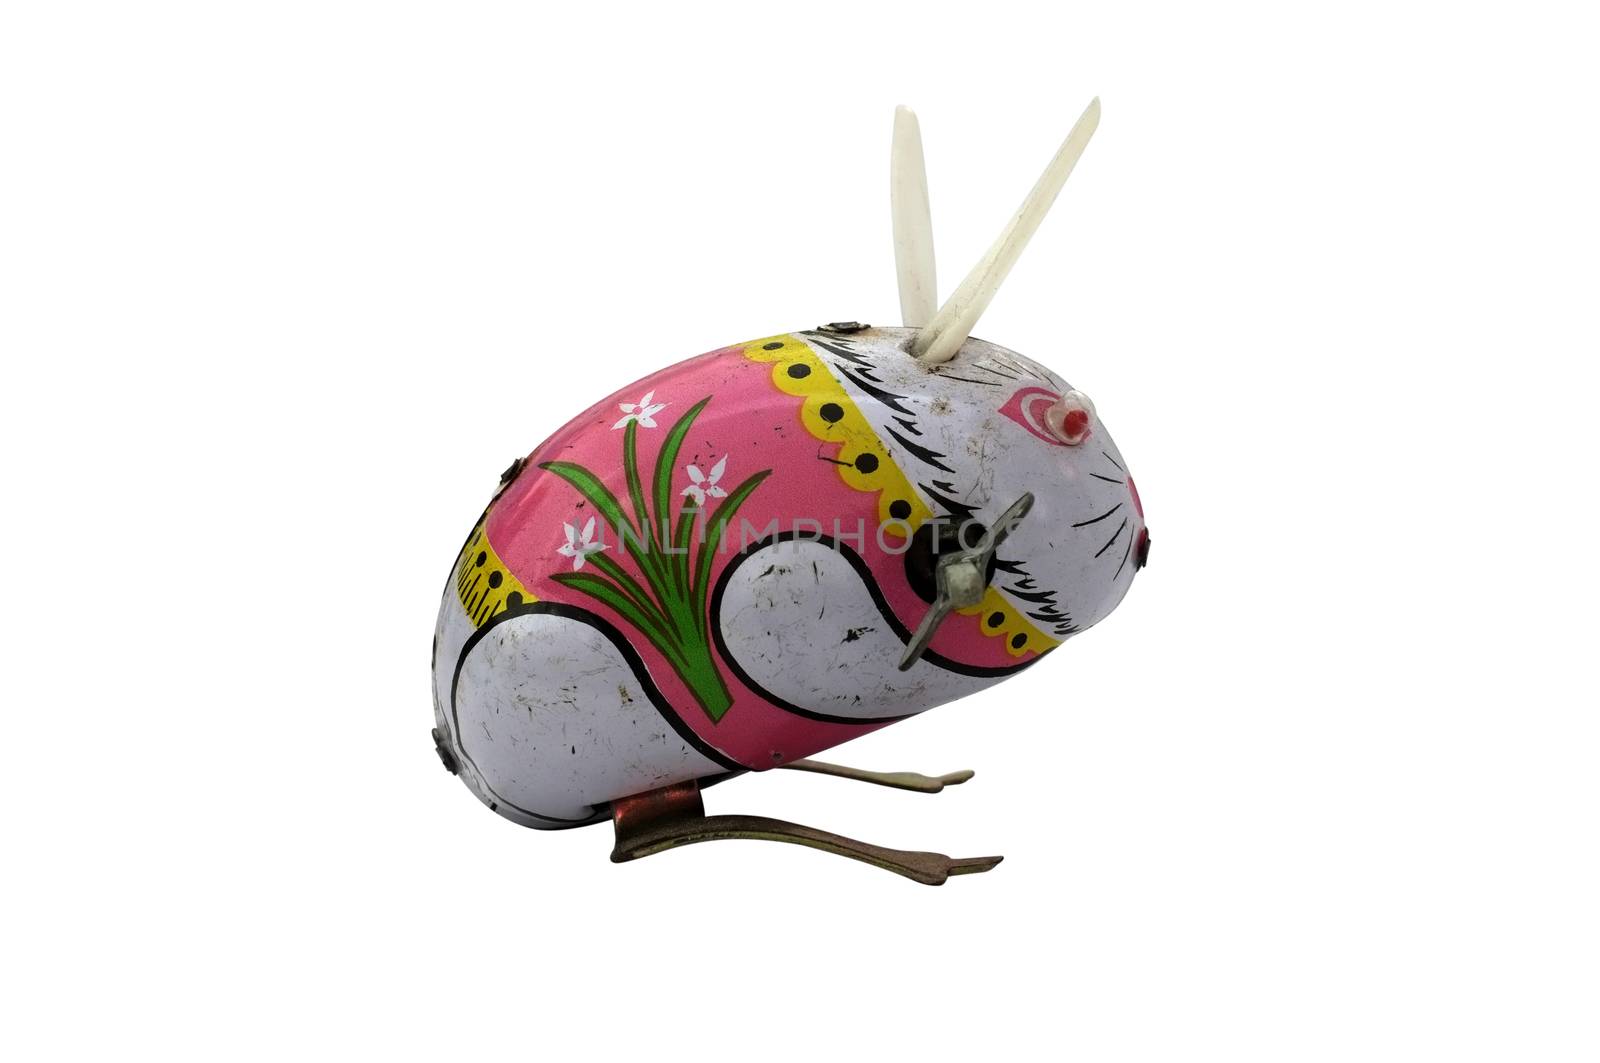 Wind-up vintage toy rabbit